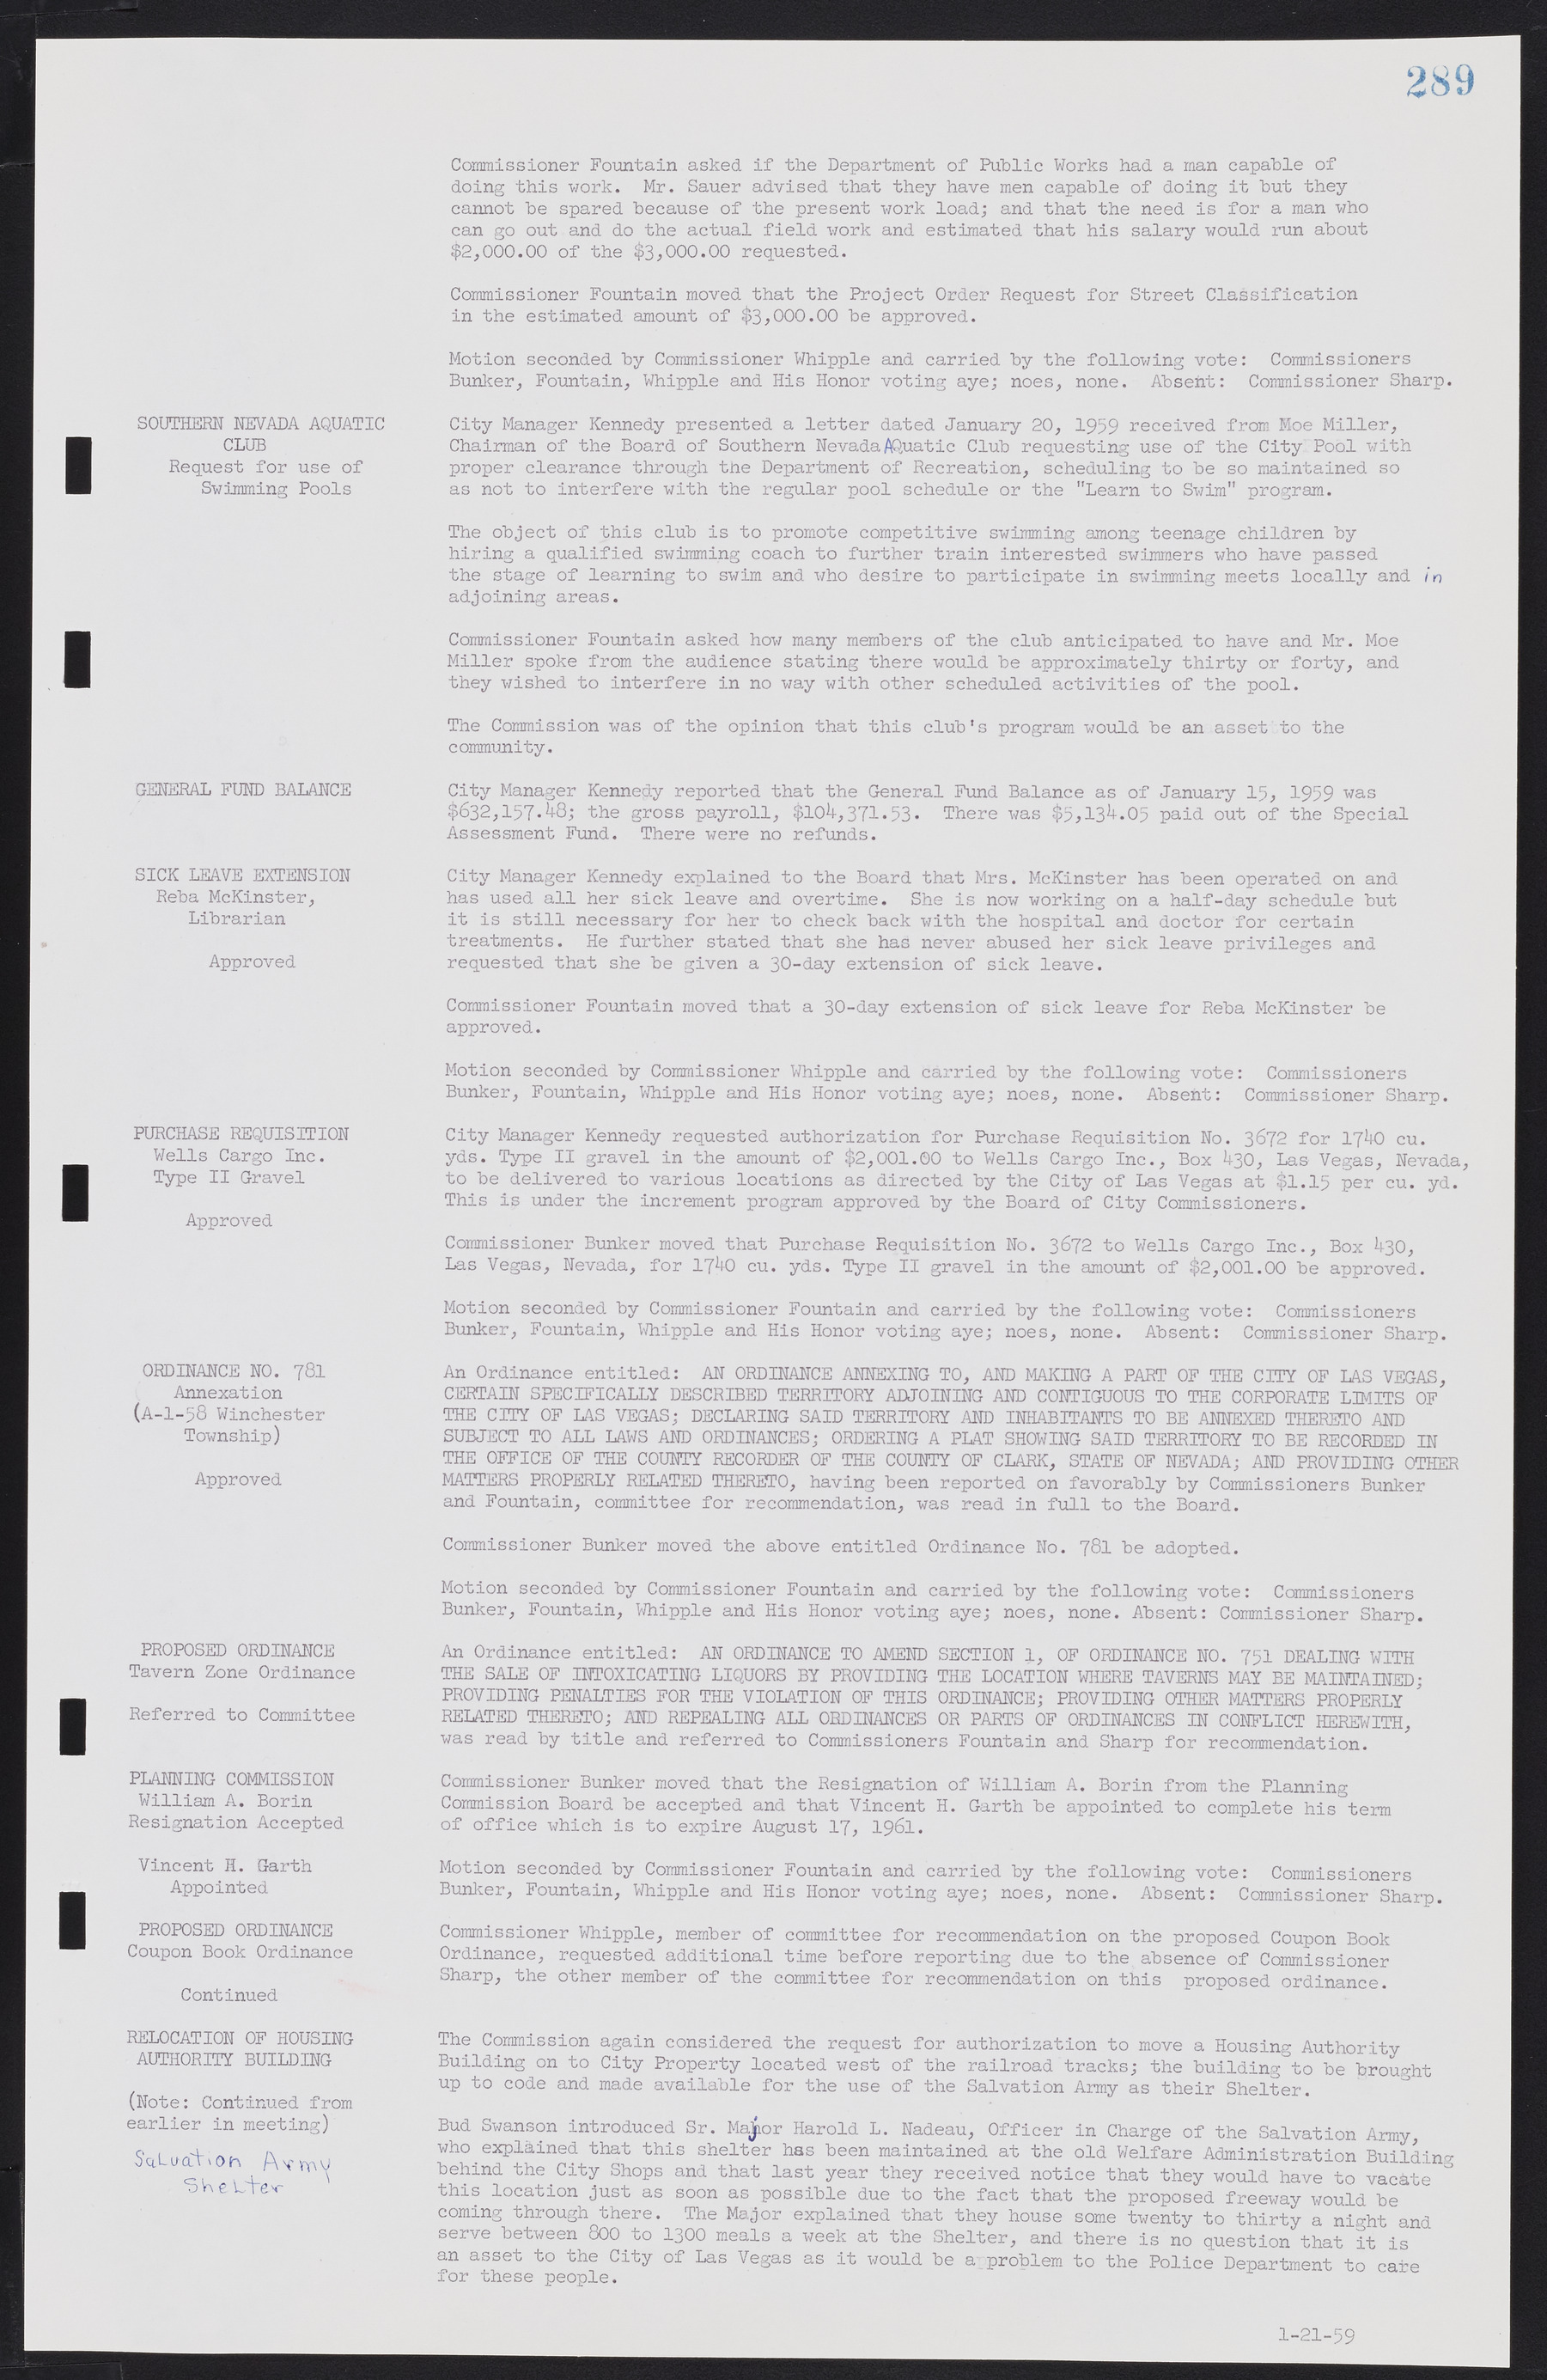 Las Vegas City Commission Minutes, November 20, 1957 to December 2, 1959, lvc000011-297